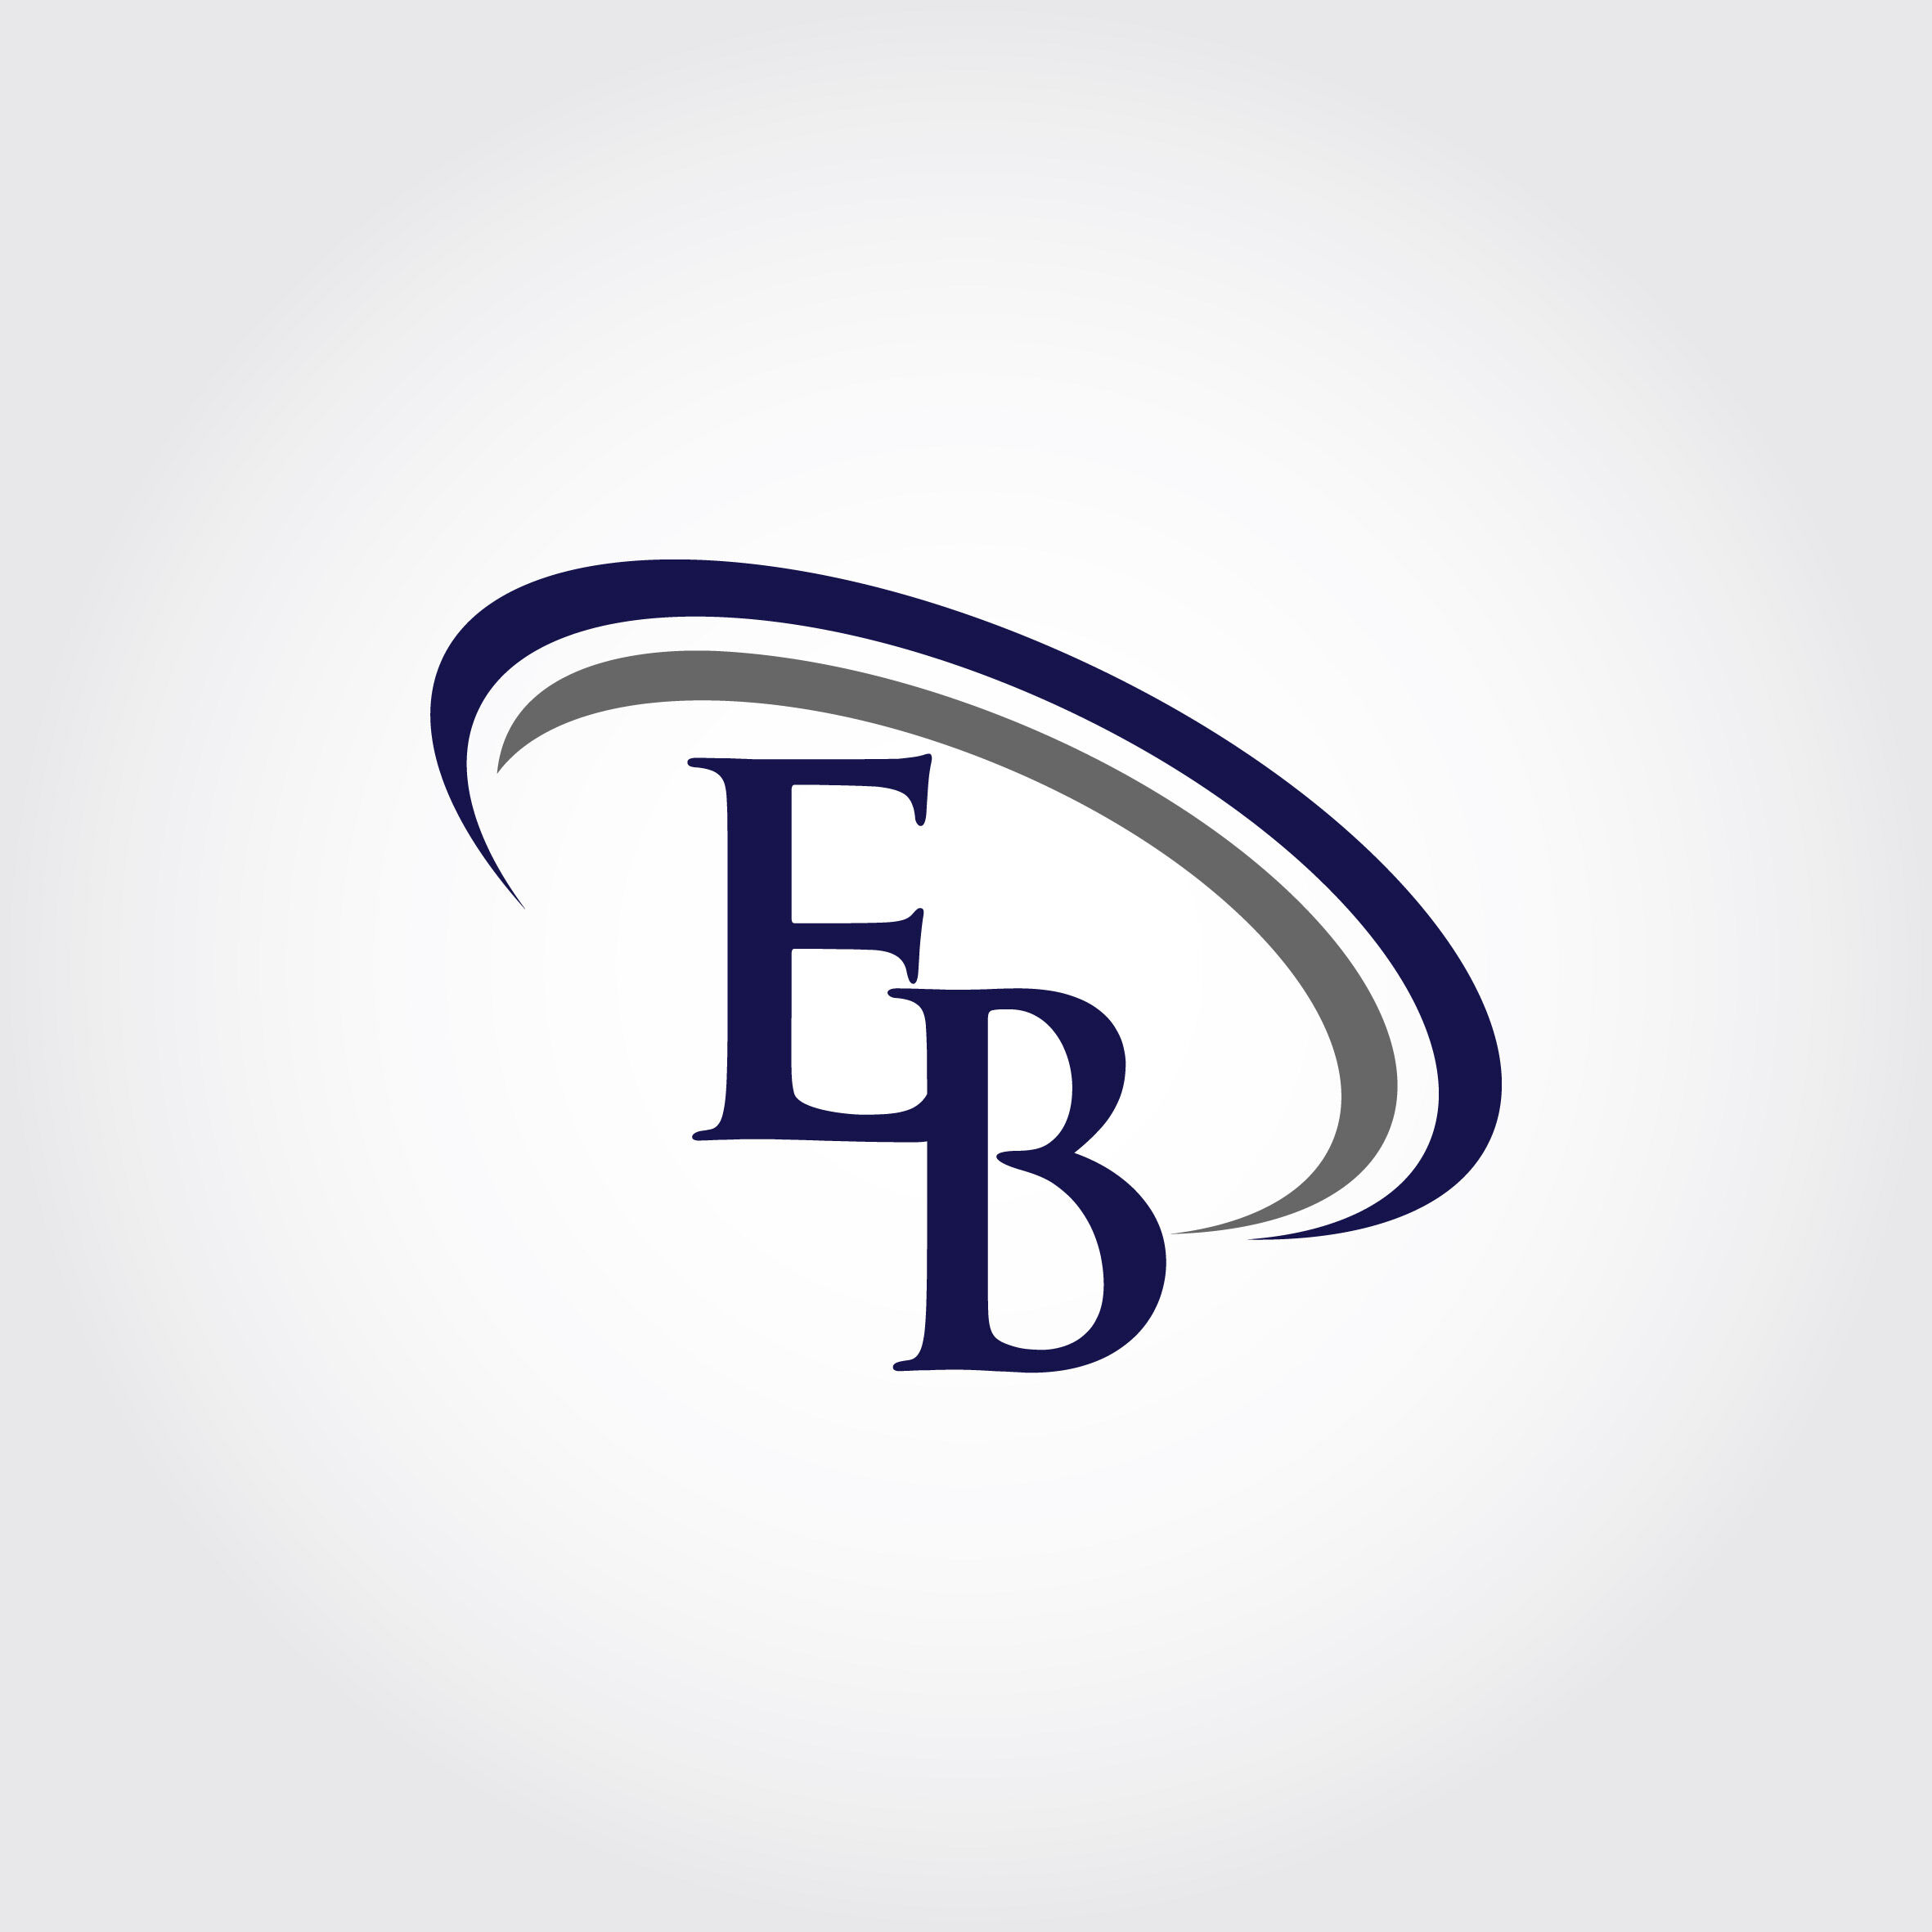 monogram-eb-logo-design-by-vectorseller-thehungryjpeg